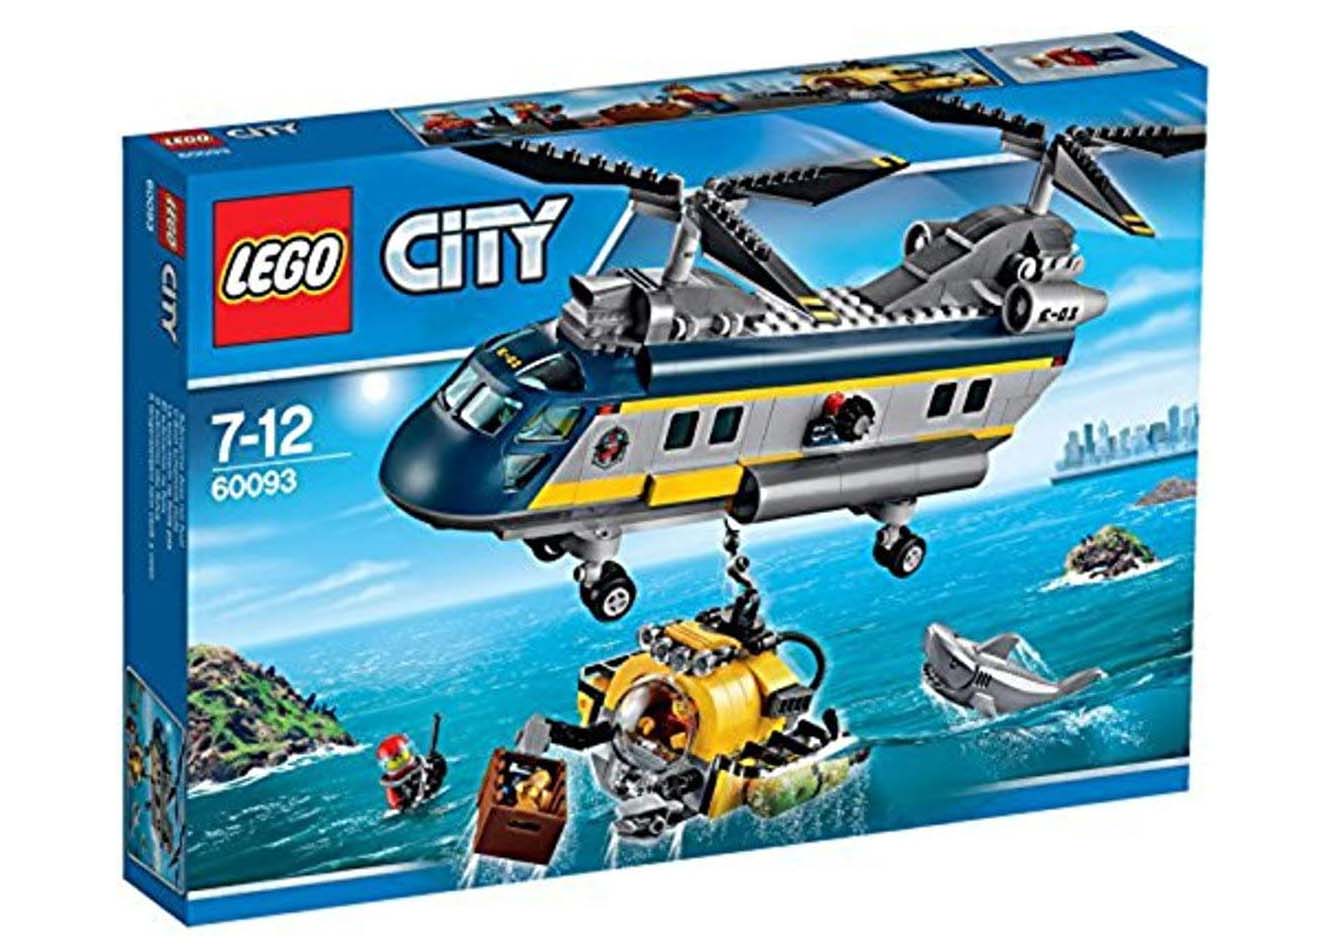 LEGO City Volcano Heavy-Lift Helicopter Set 60125 - CN